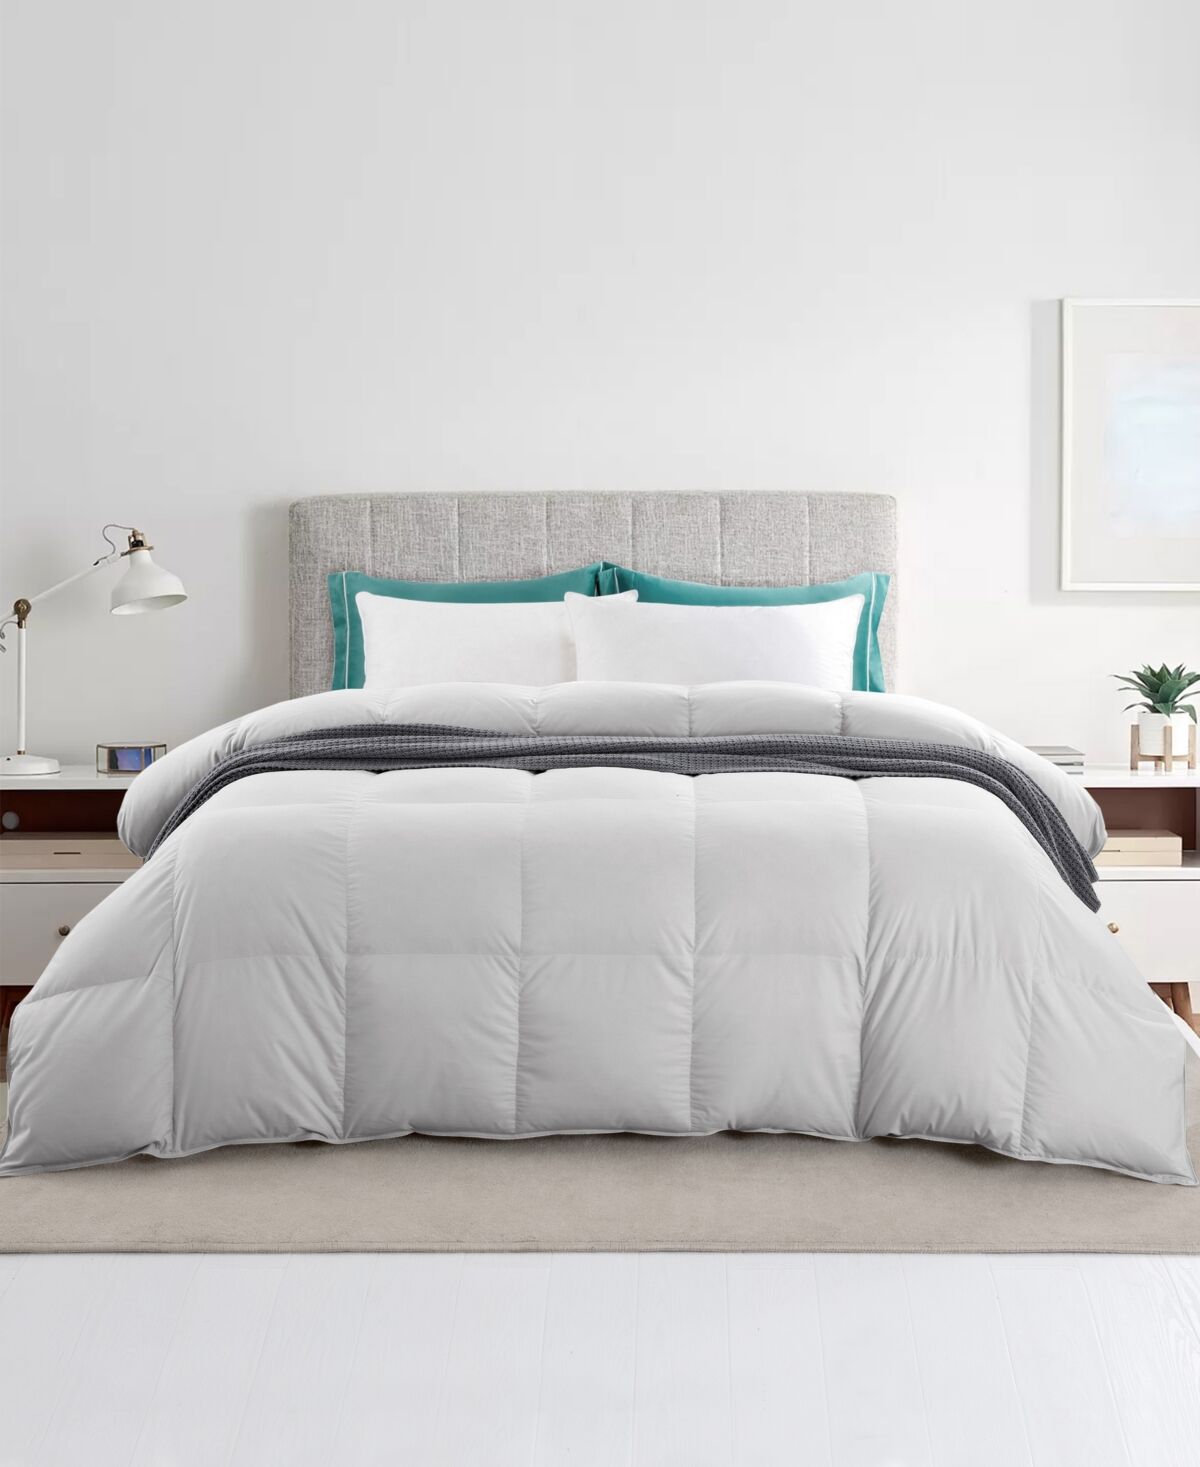 Unikome Year Round Ultra Soft Fabric Baffled Box Design 75% Down Comforter, Full-Queen - Silver-Tone